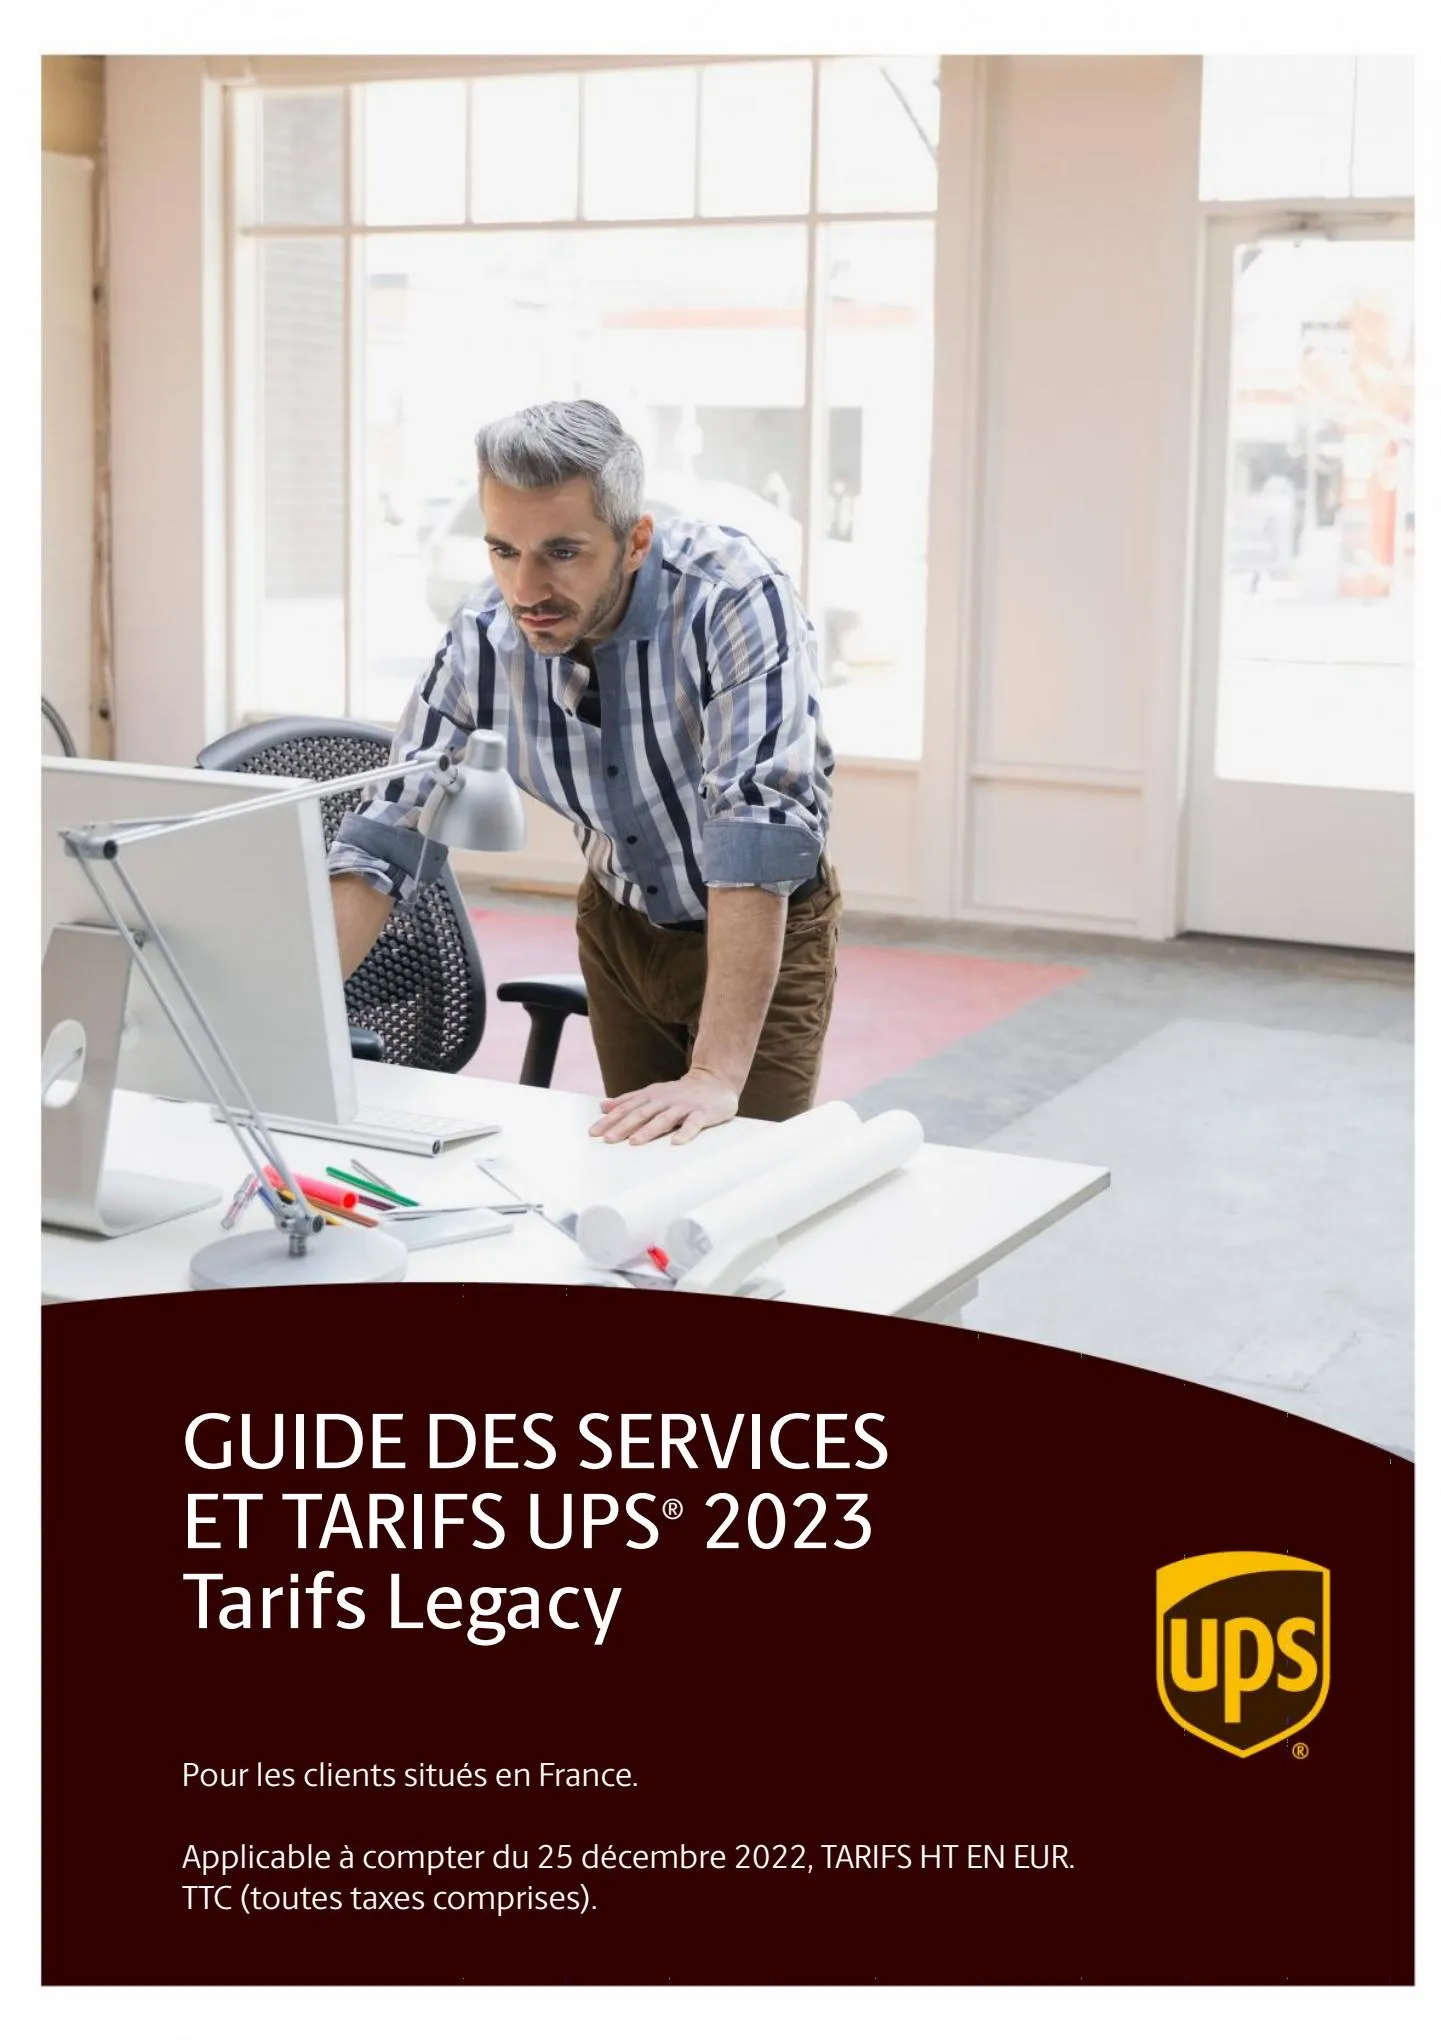 Catalogue TARIFS UPS®  2023, page 00001